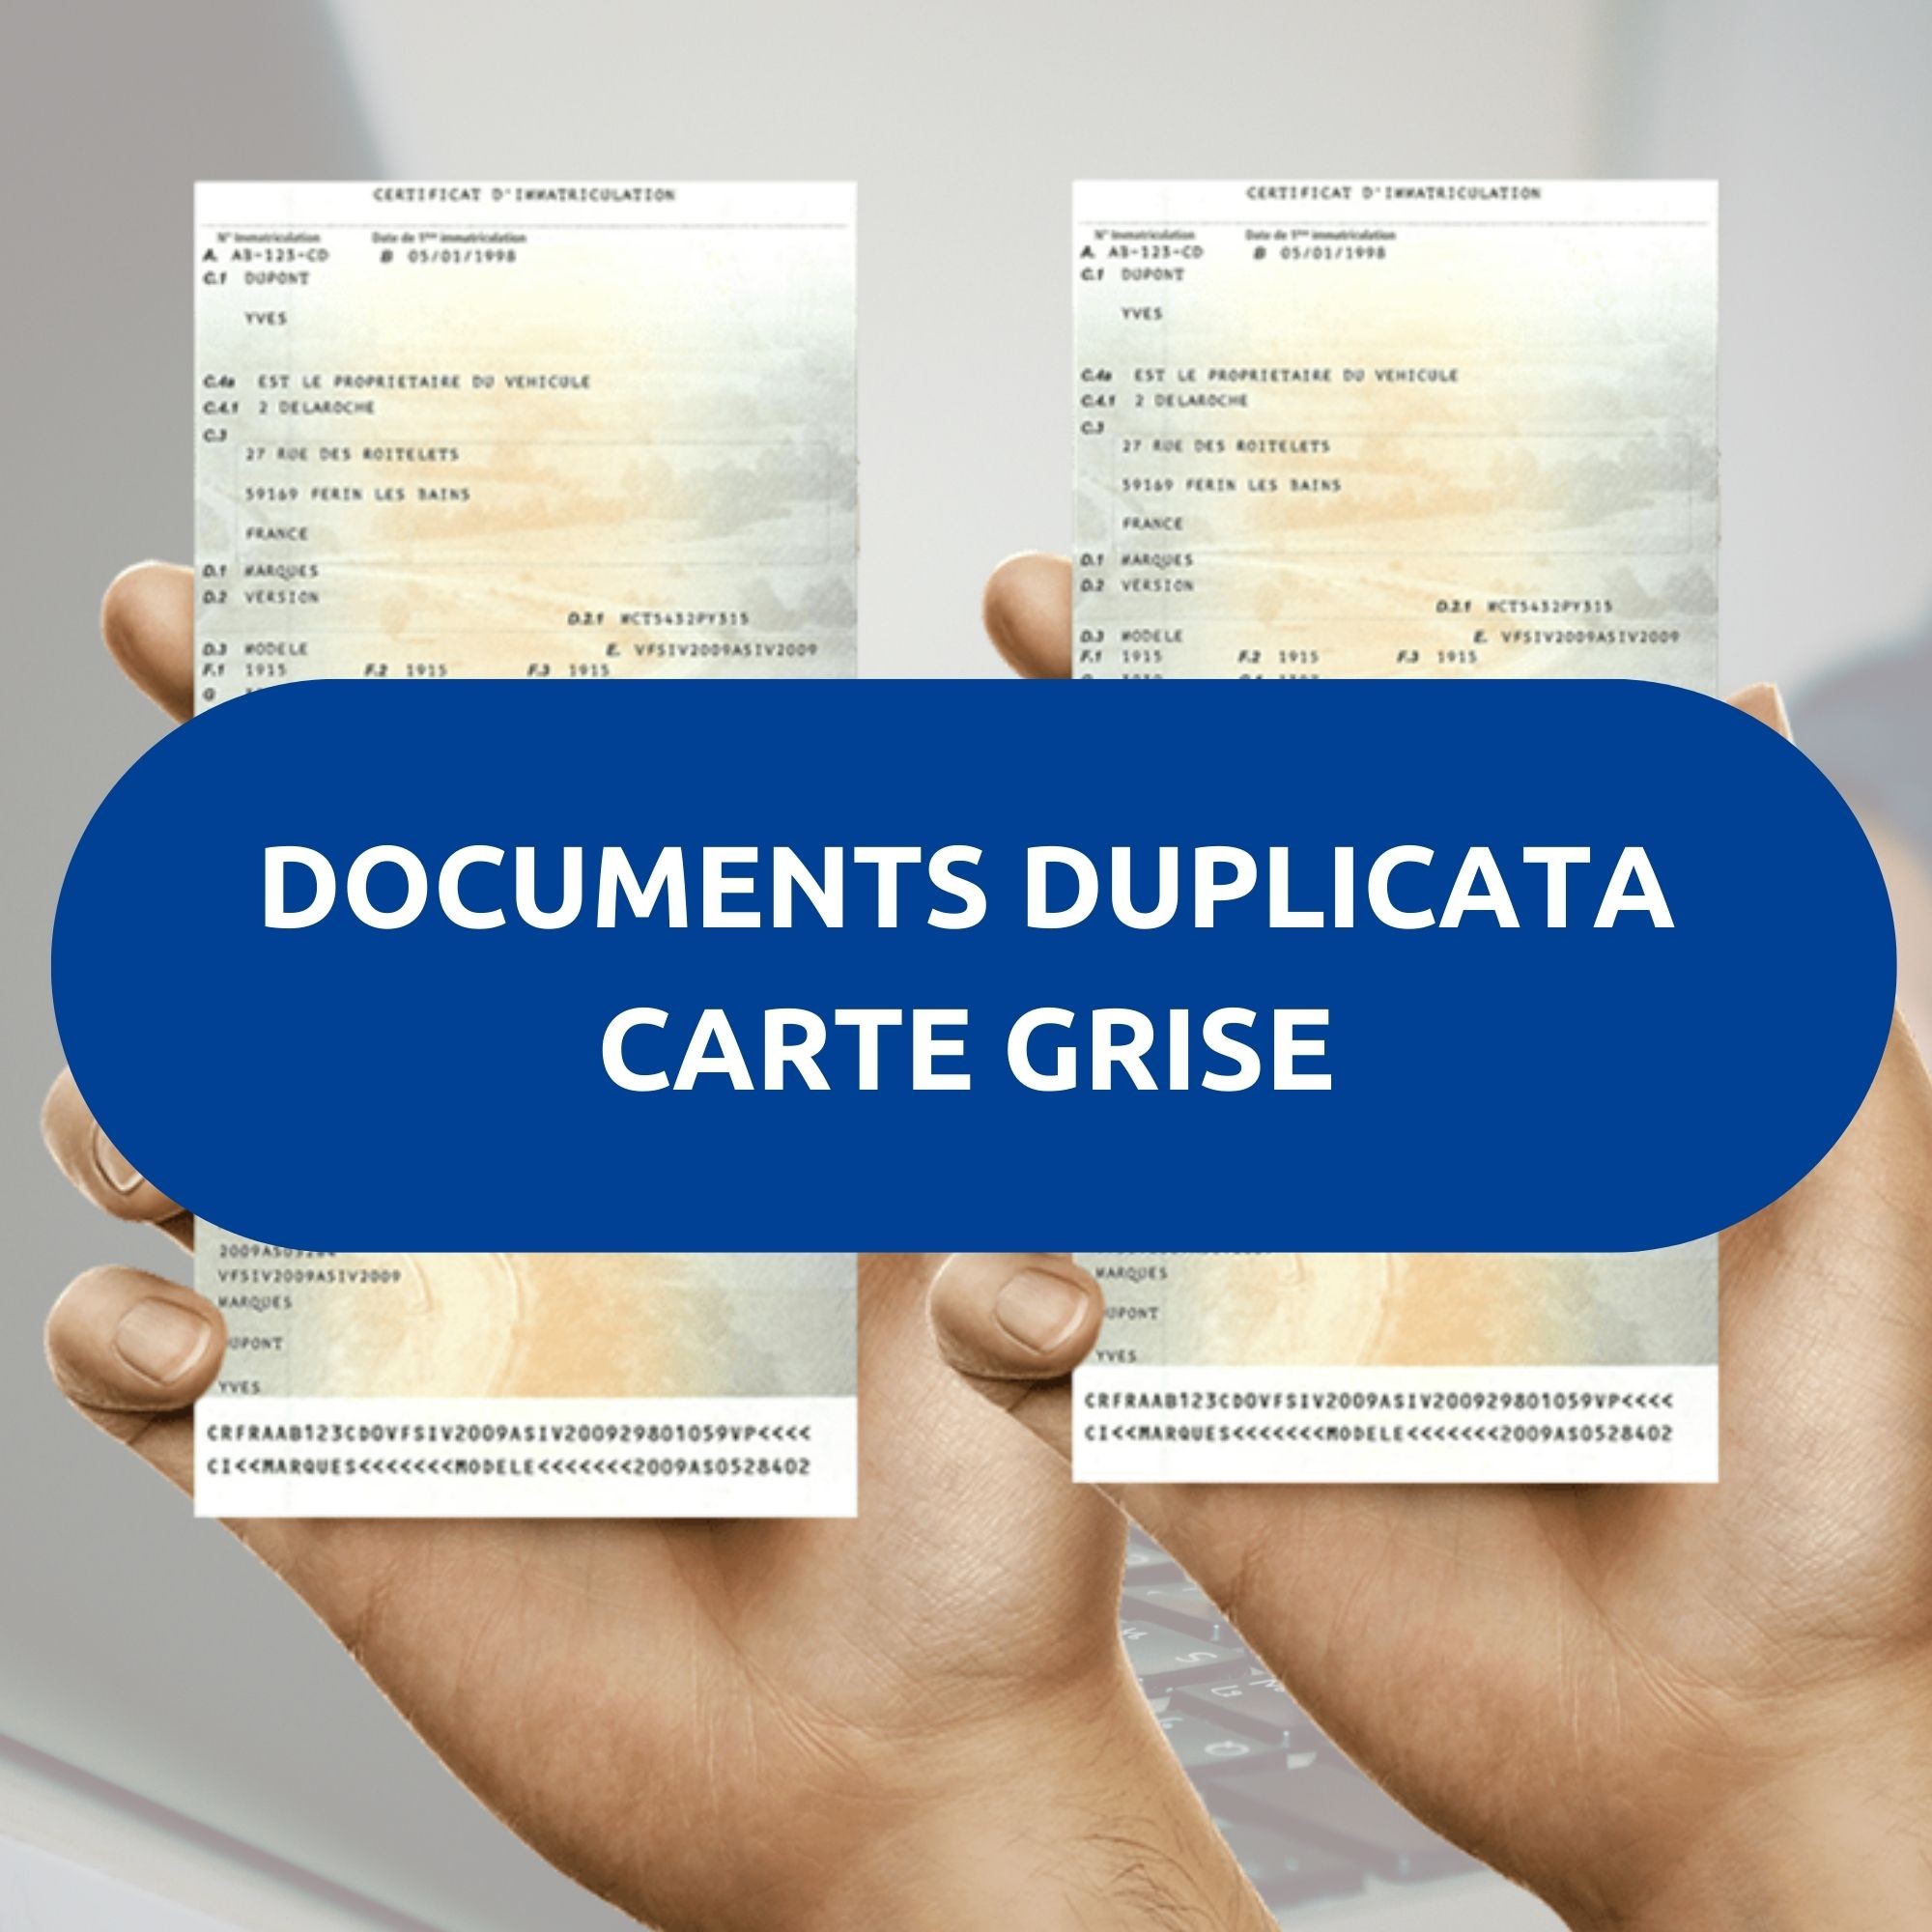 Documents duplicata carte grise